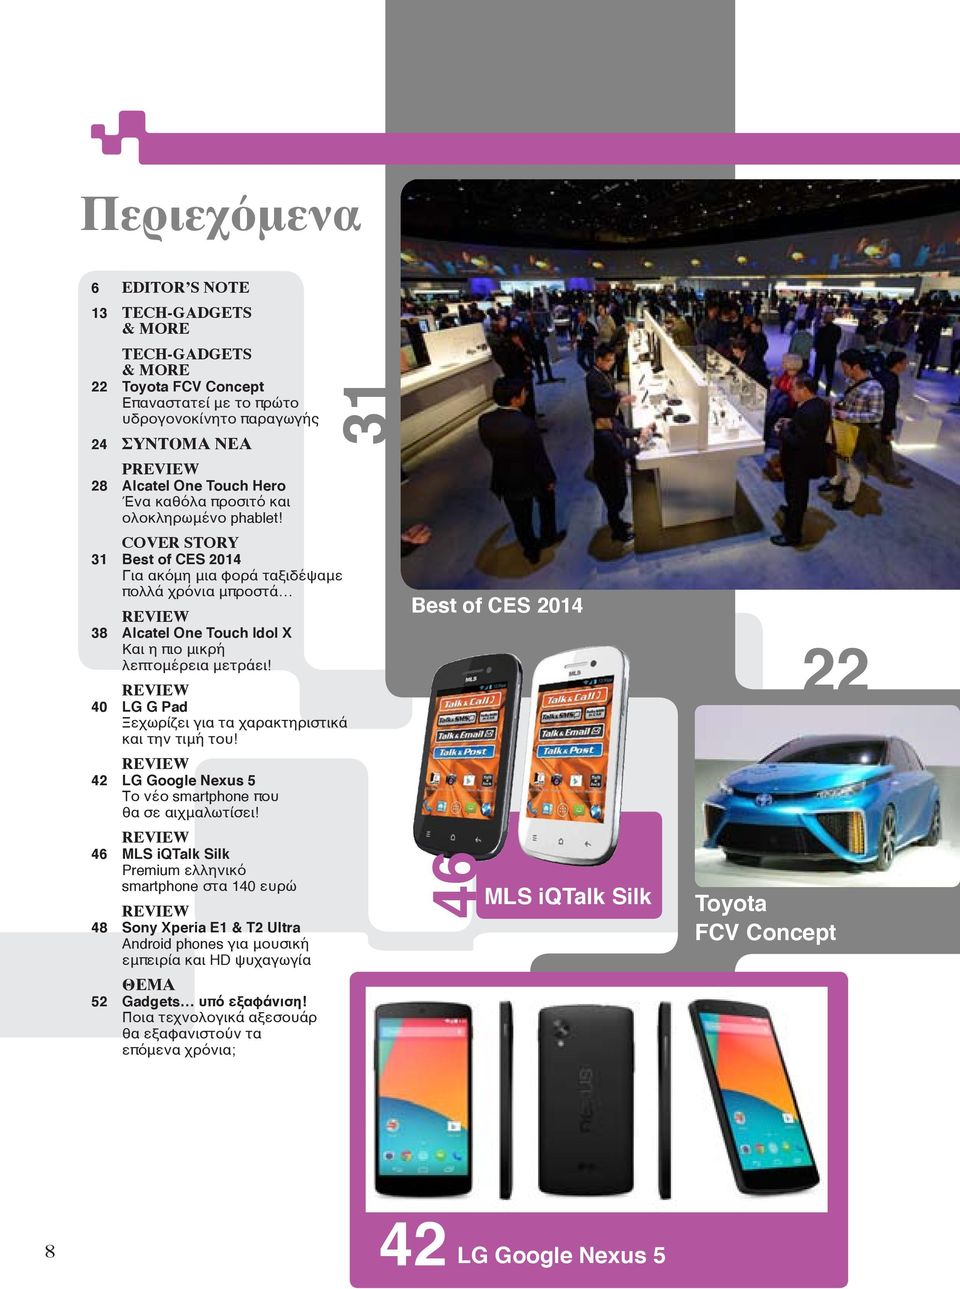 REVIEW 40 LG G Pad Ξεχωρίζει για τα χαρακτηριστικά και την τιμή του! REVIEW 42 LG Google Nexus 5 Το νέο smartphone που θα σε αιχμαλωτίσει!